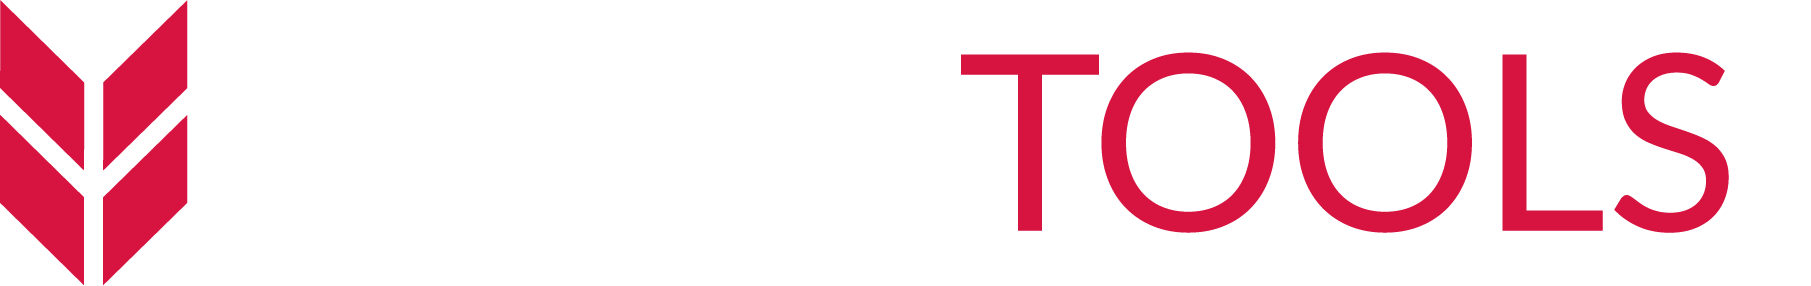 BarnTools-logo-onDark-RGB@3x